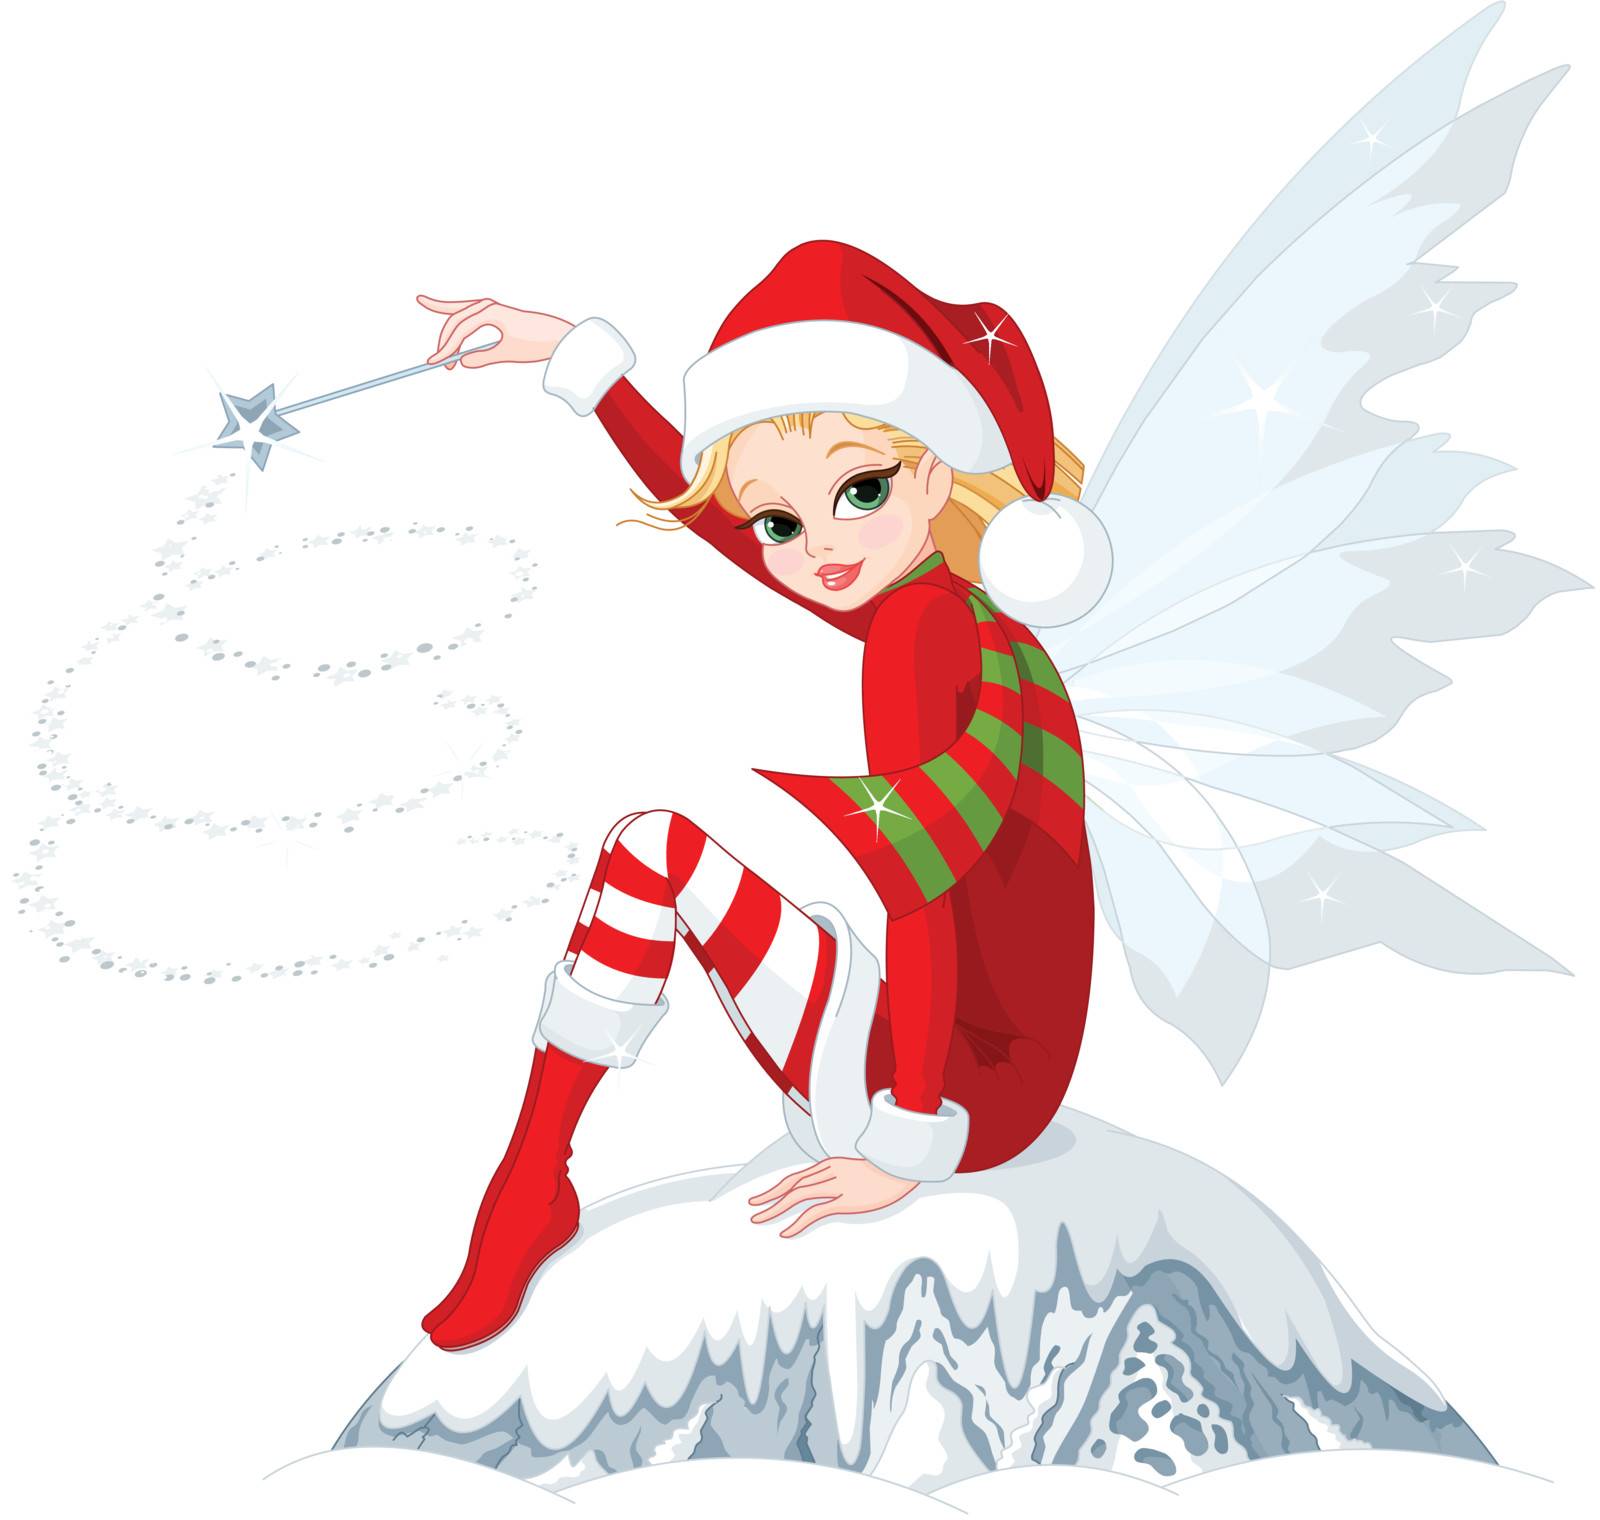 Christmas fairy by Dazdraperma